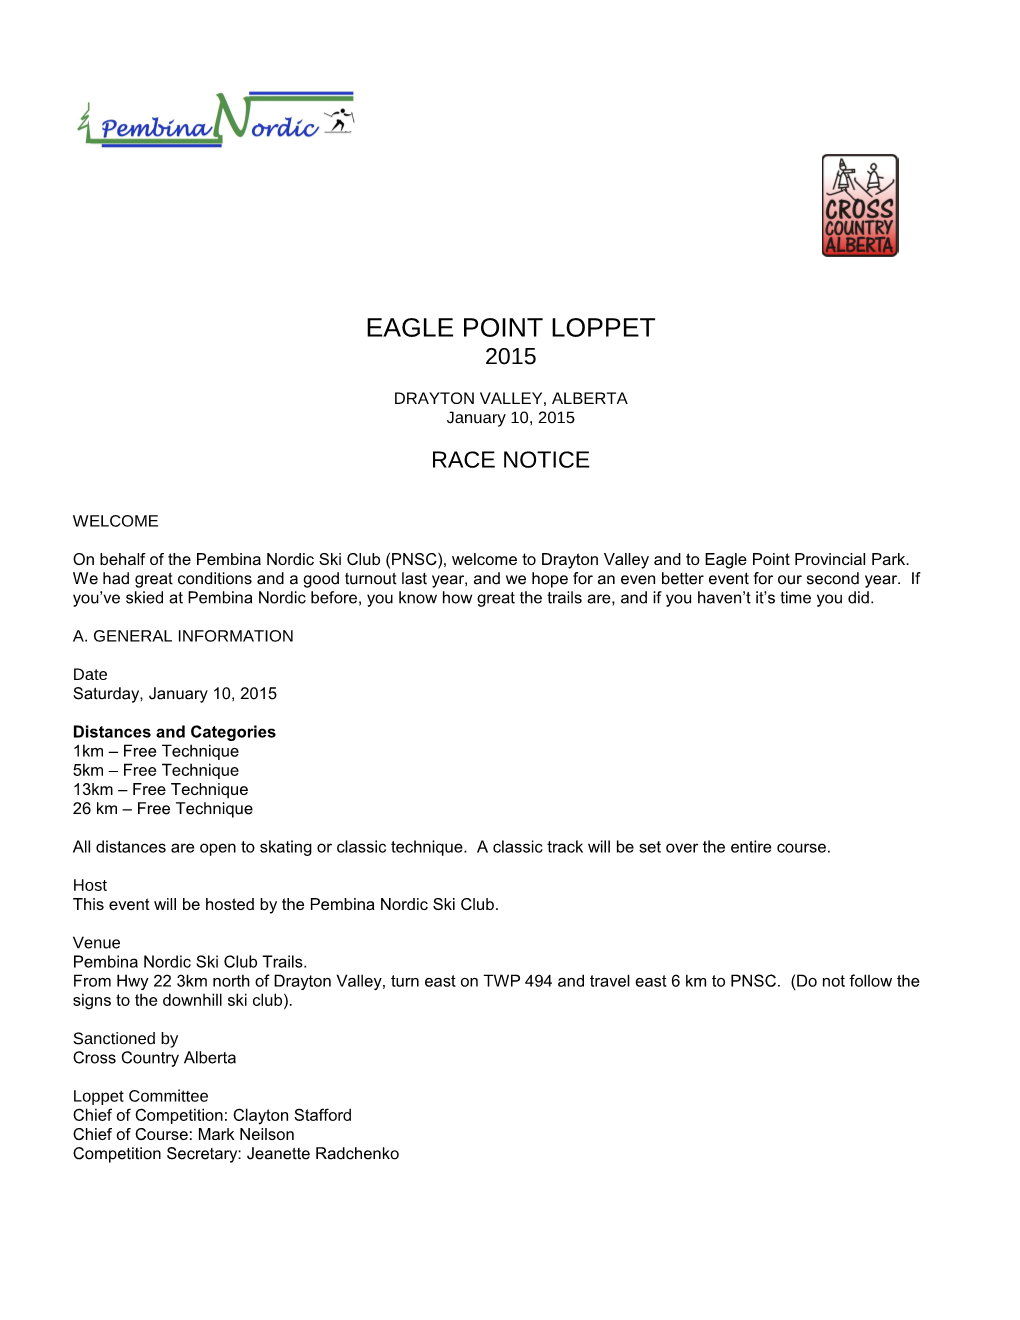 Eagle Point Loppet